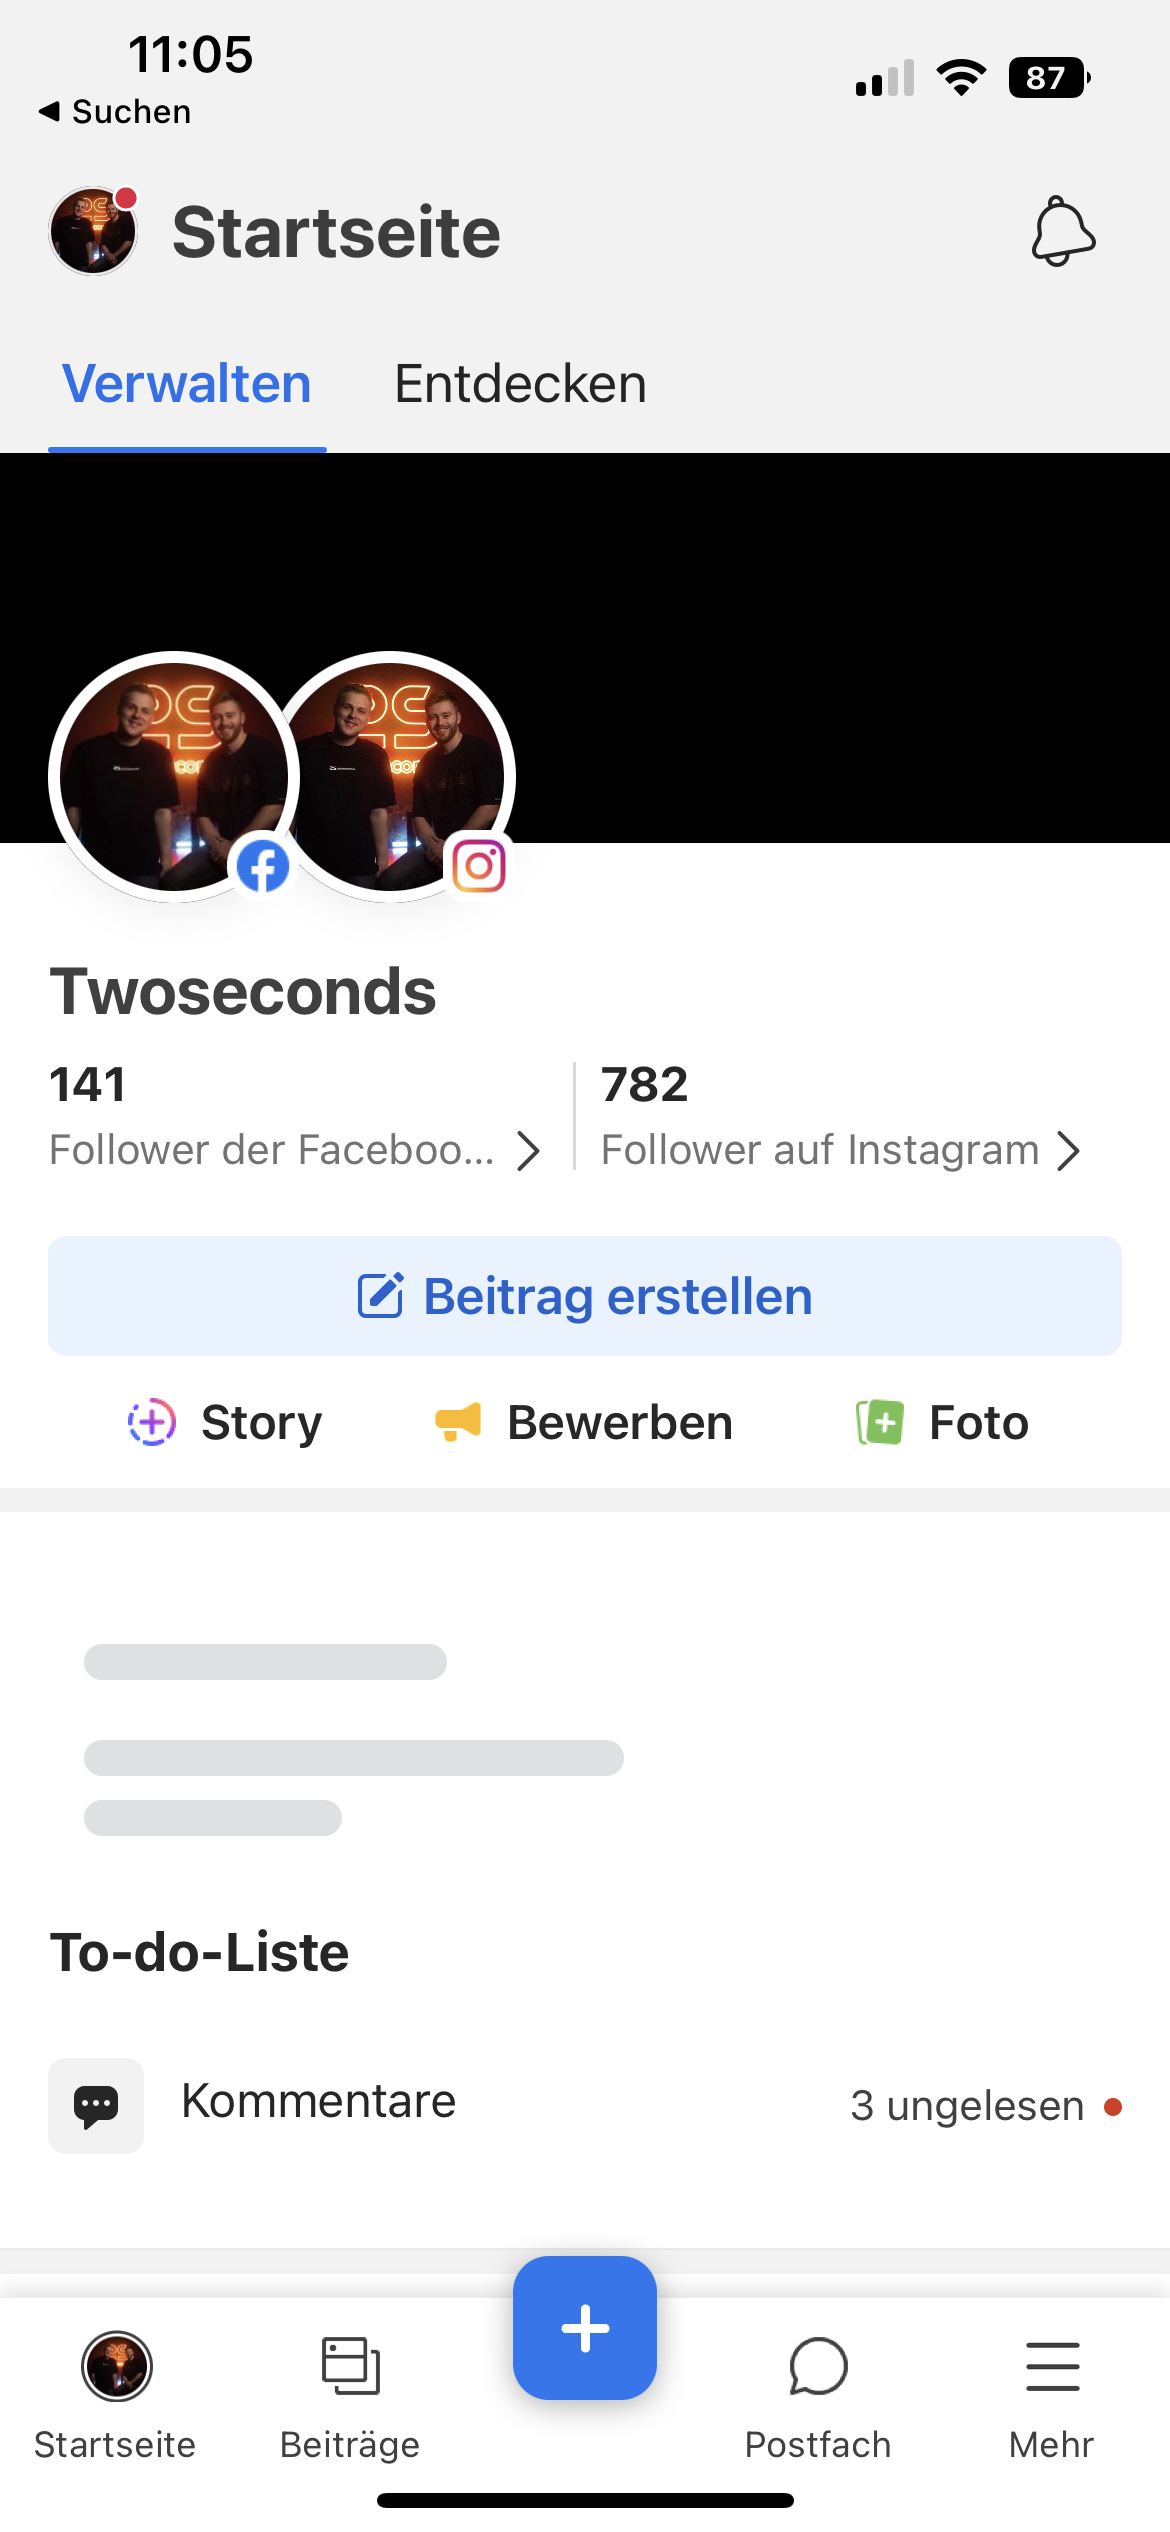 Social-Media-Plattform Facebook, Account der Werbeagentur twoseconds